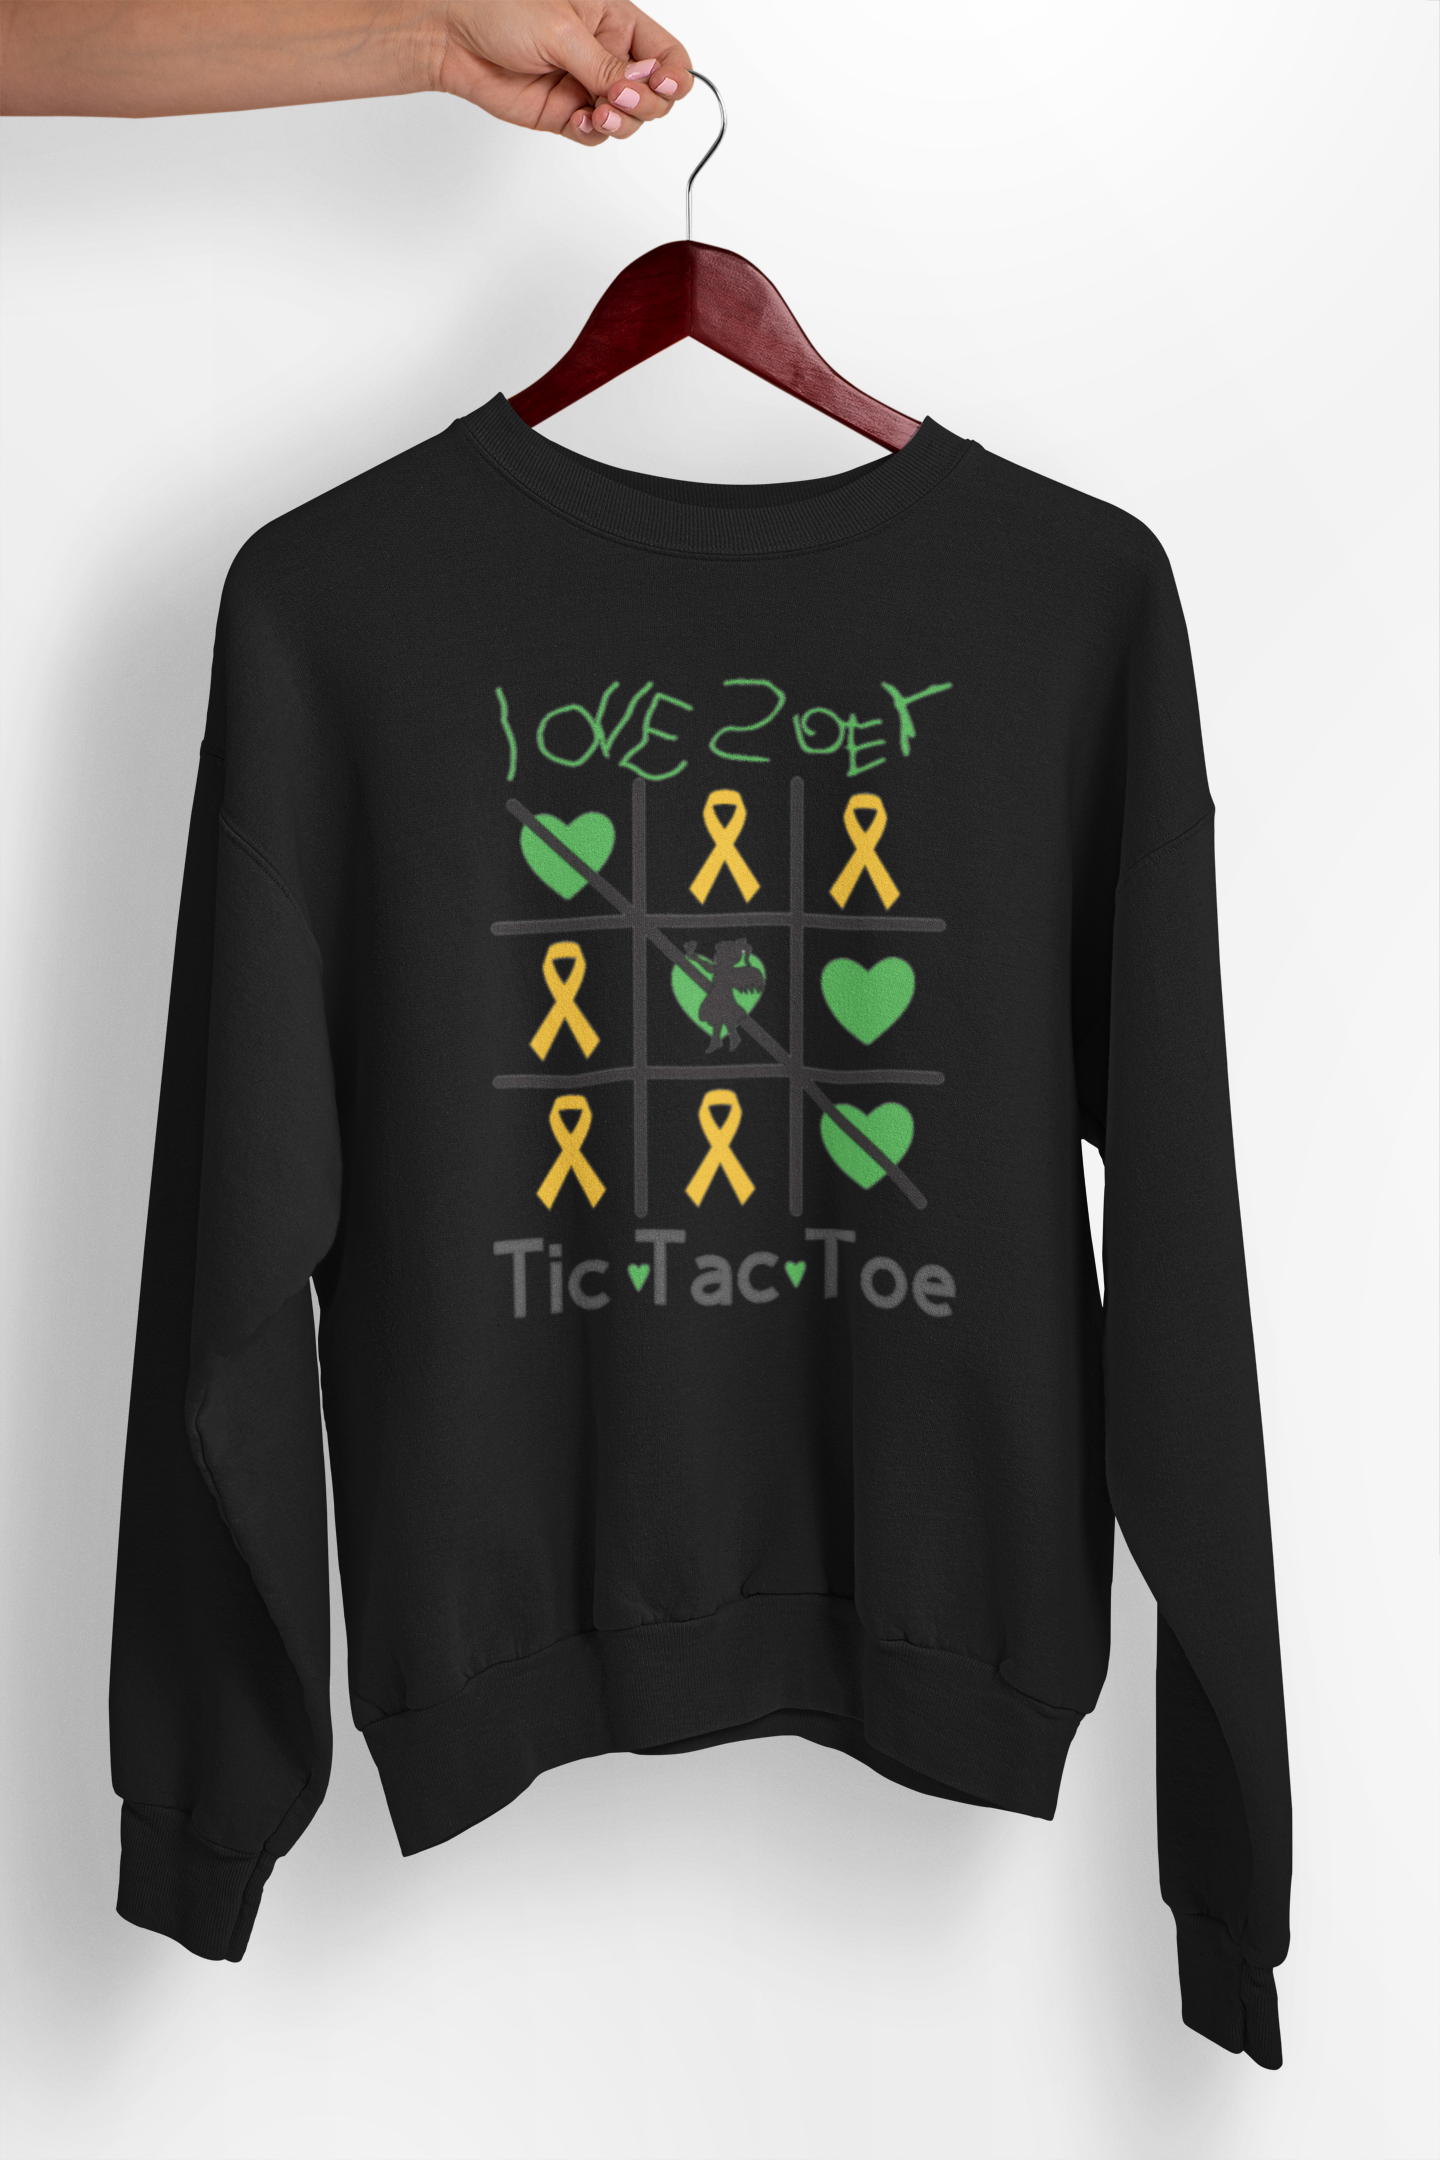 Love Zoey Tic Tac Toe Crewneck Sweatshirt - Black